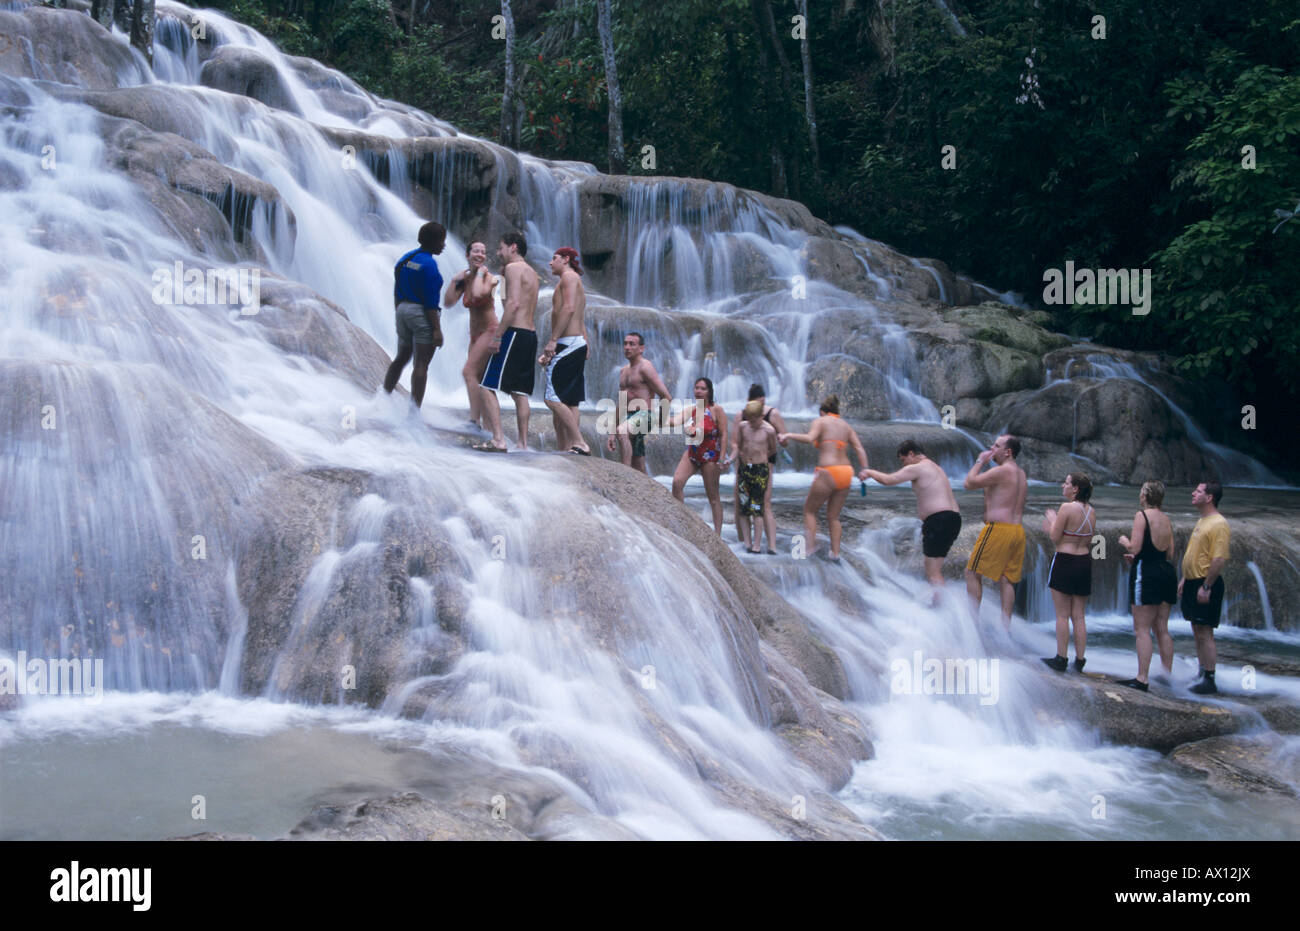 Tourists forming human chain Dunn's River Falls Ocho Rios Jamaica January 2005 Stock Photo